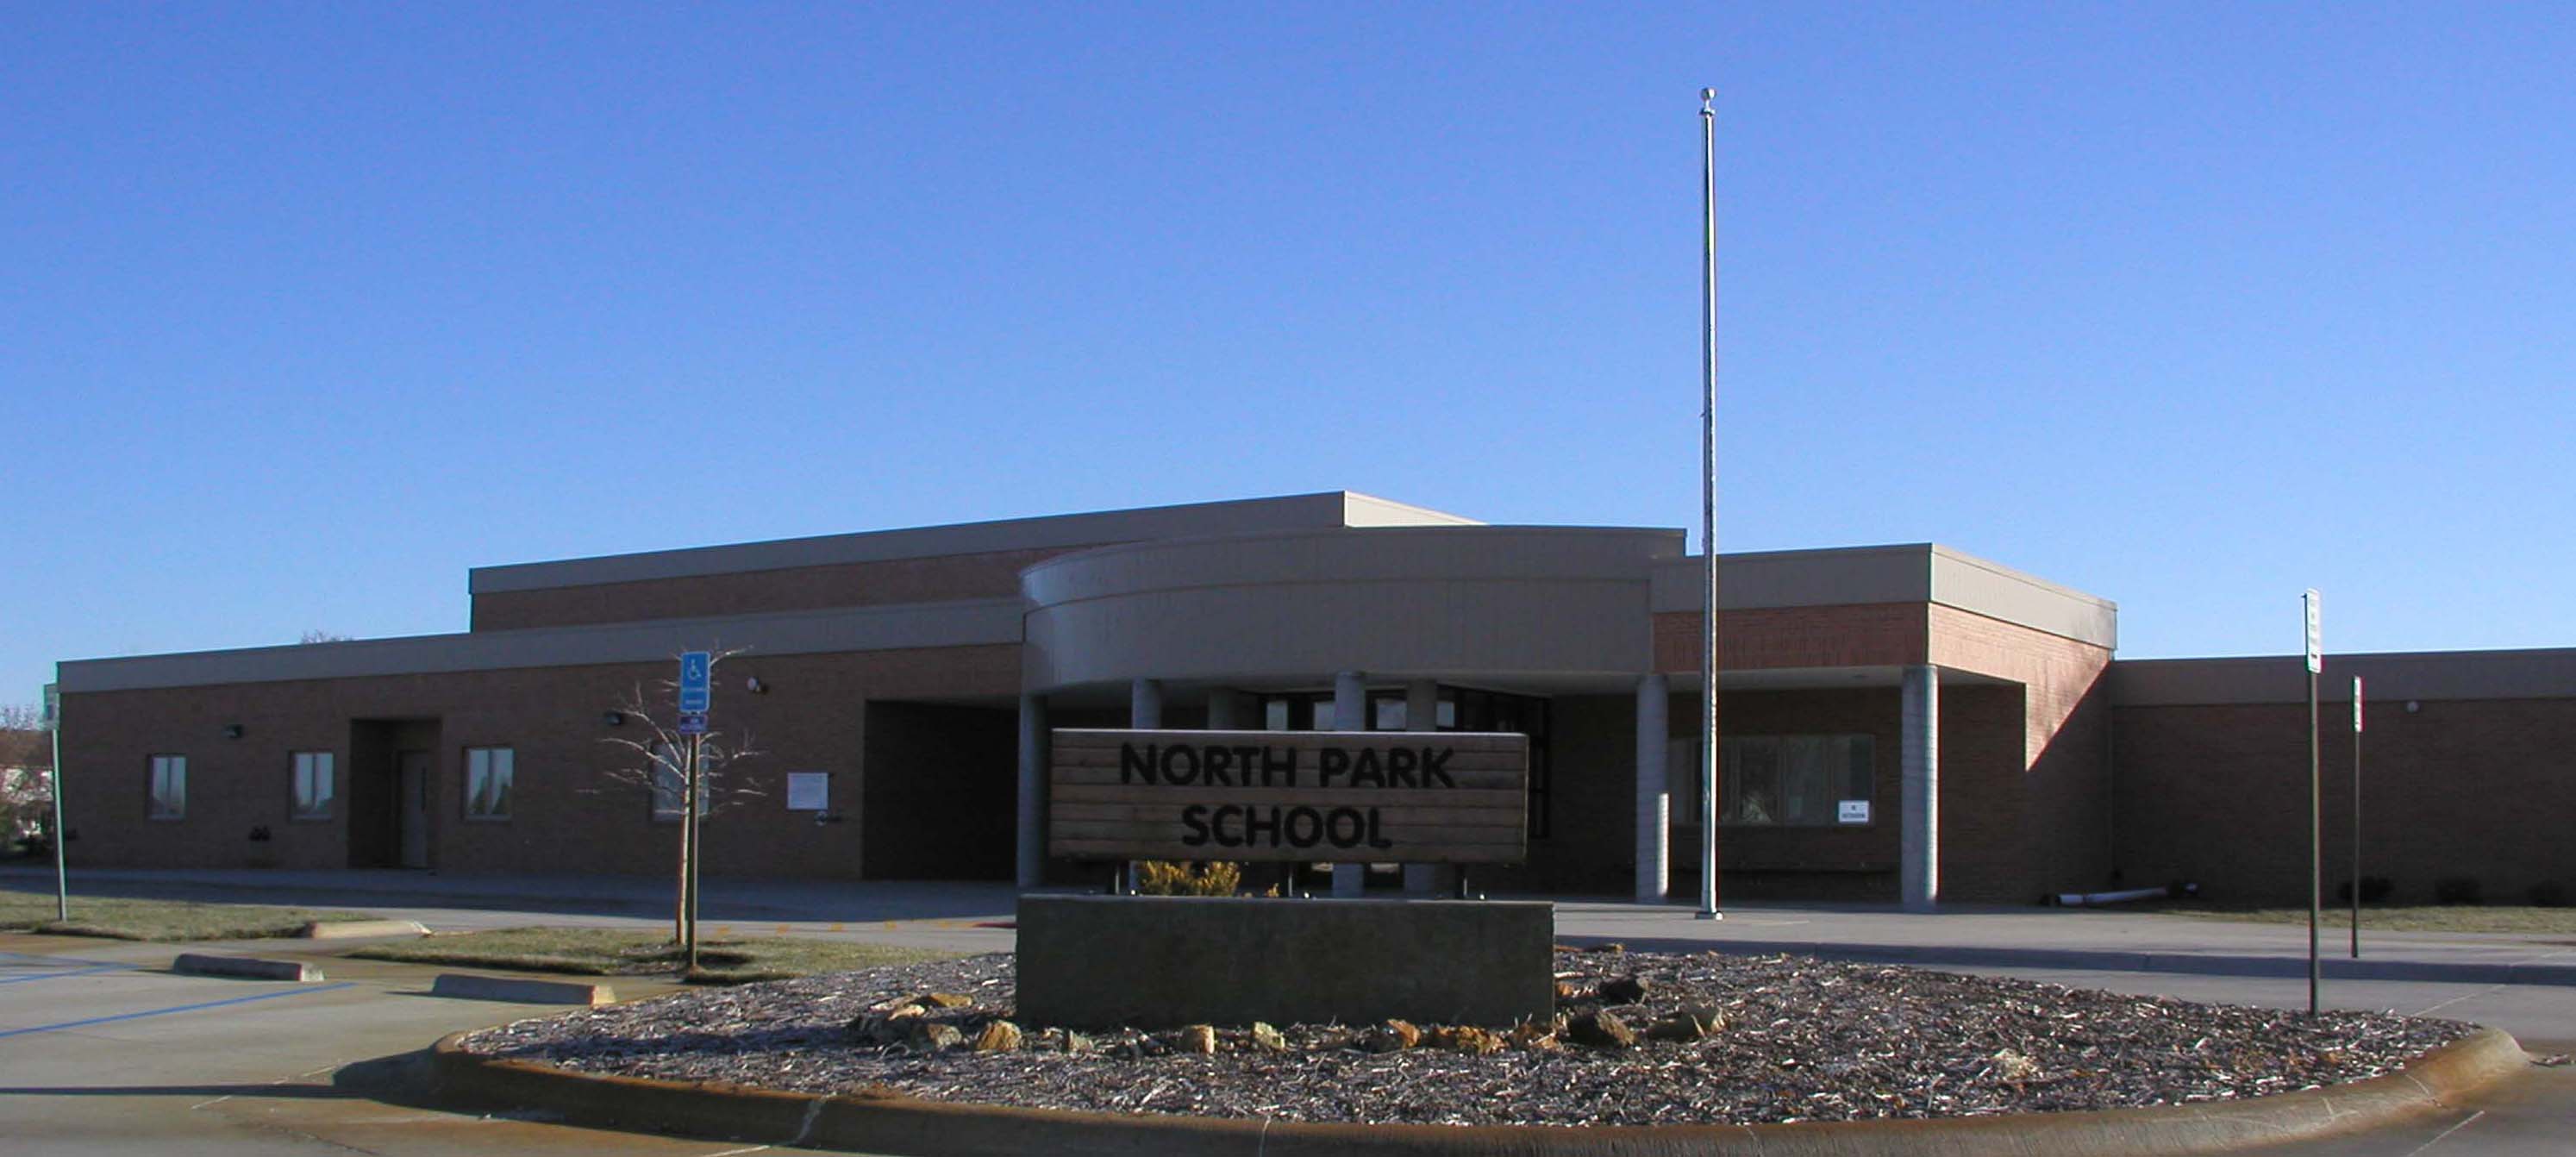 North Park Elementary Entrance - Exterior